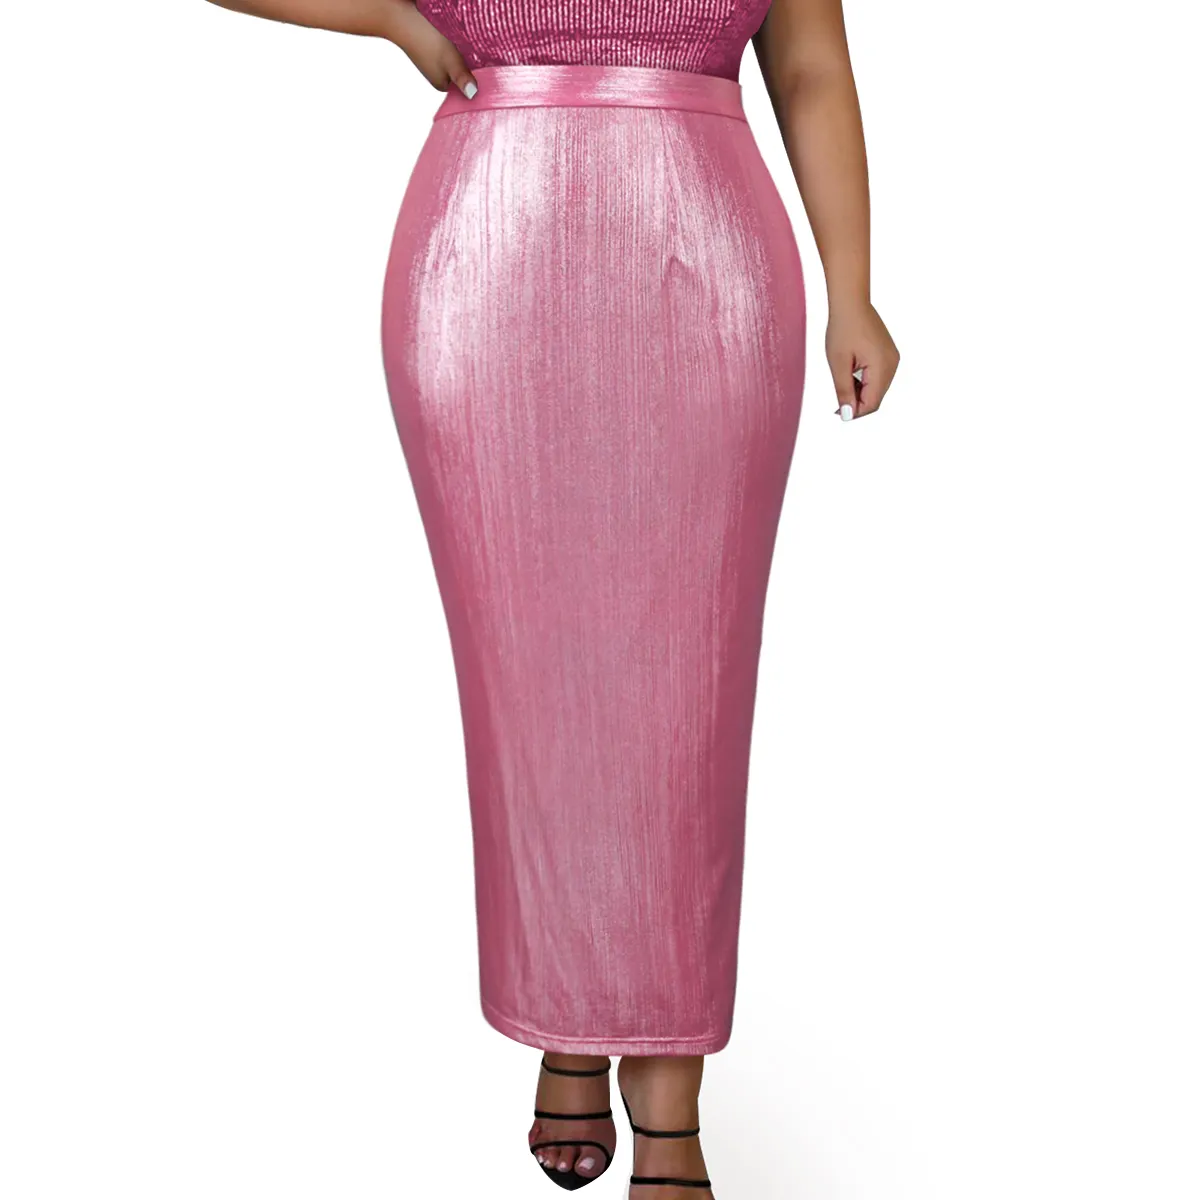 Rok panjang Glitter wanita, Bodycon pinggang tinggi Glitter Solid, merah muda, rok panjang elastis